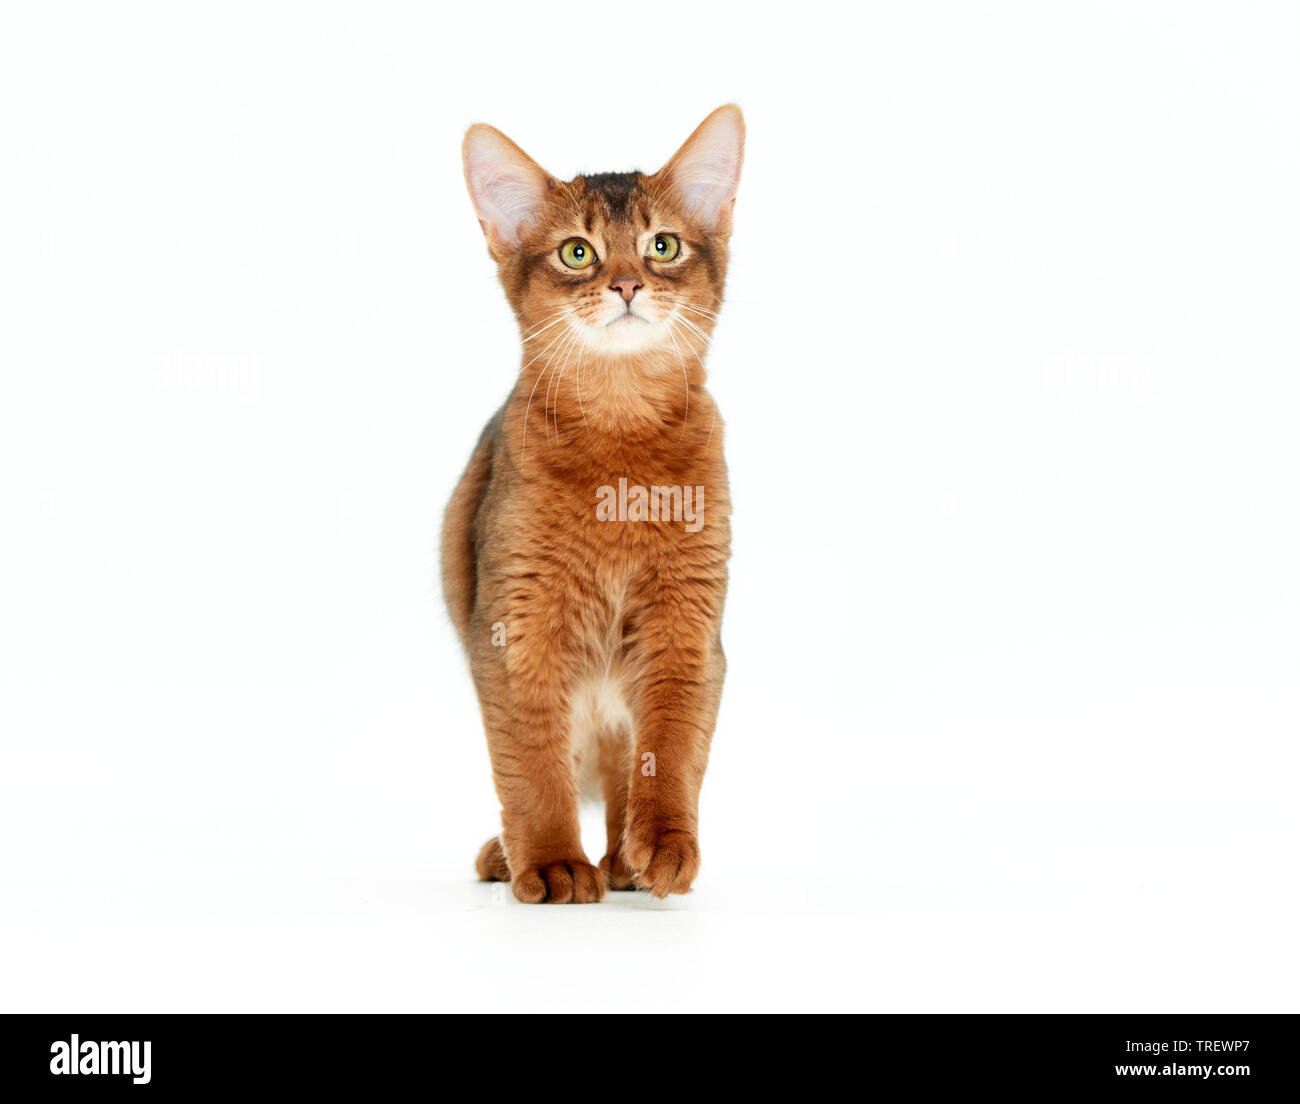 Somali cat. Kitten walking, seen head-on. Studio picture against a white background Stock Photo